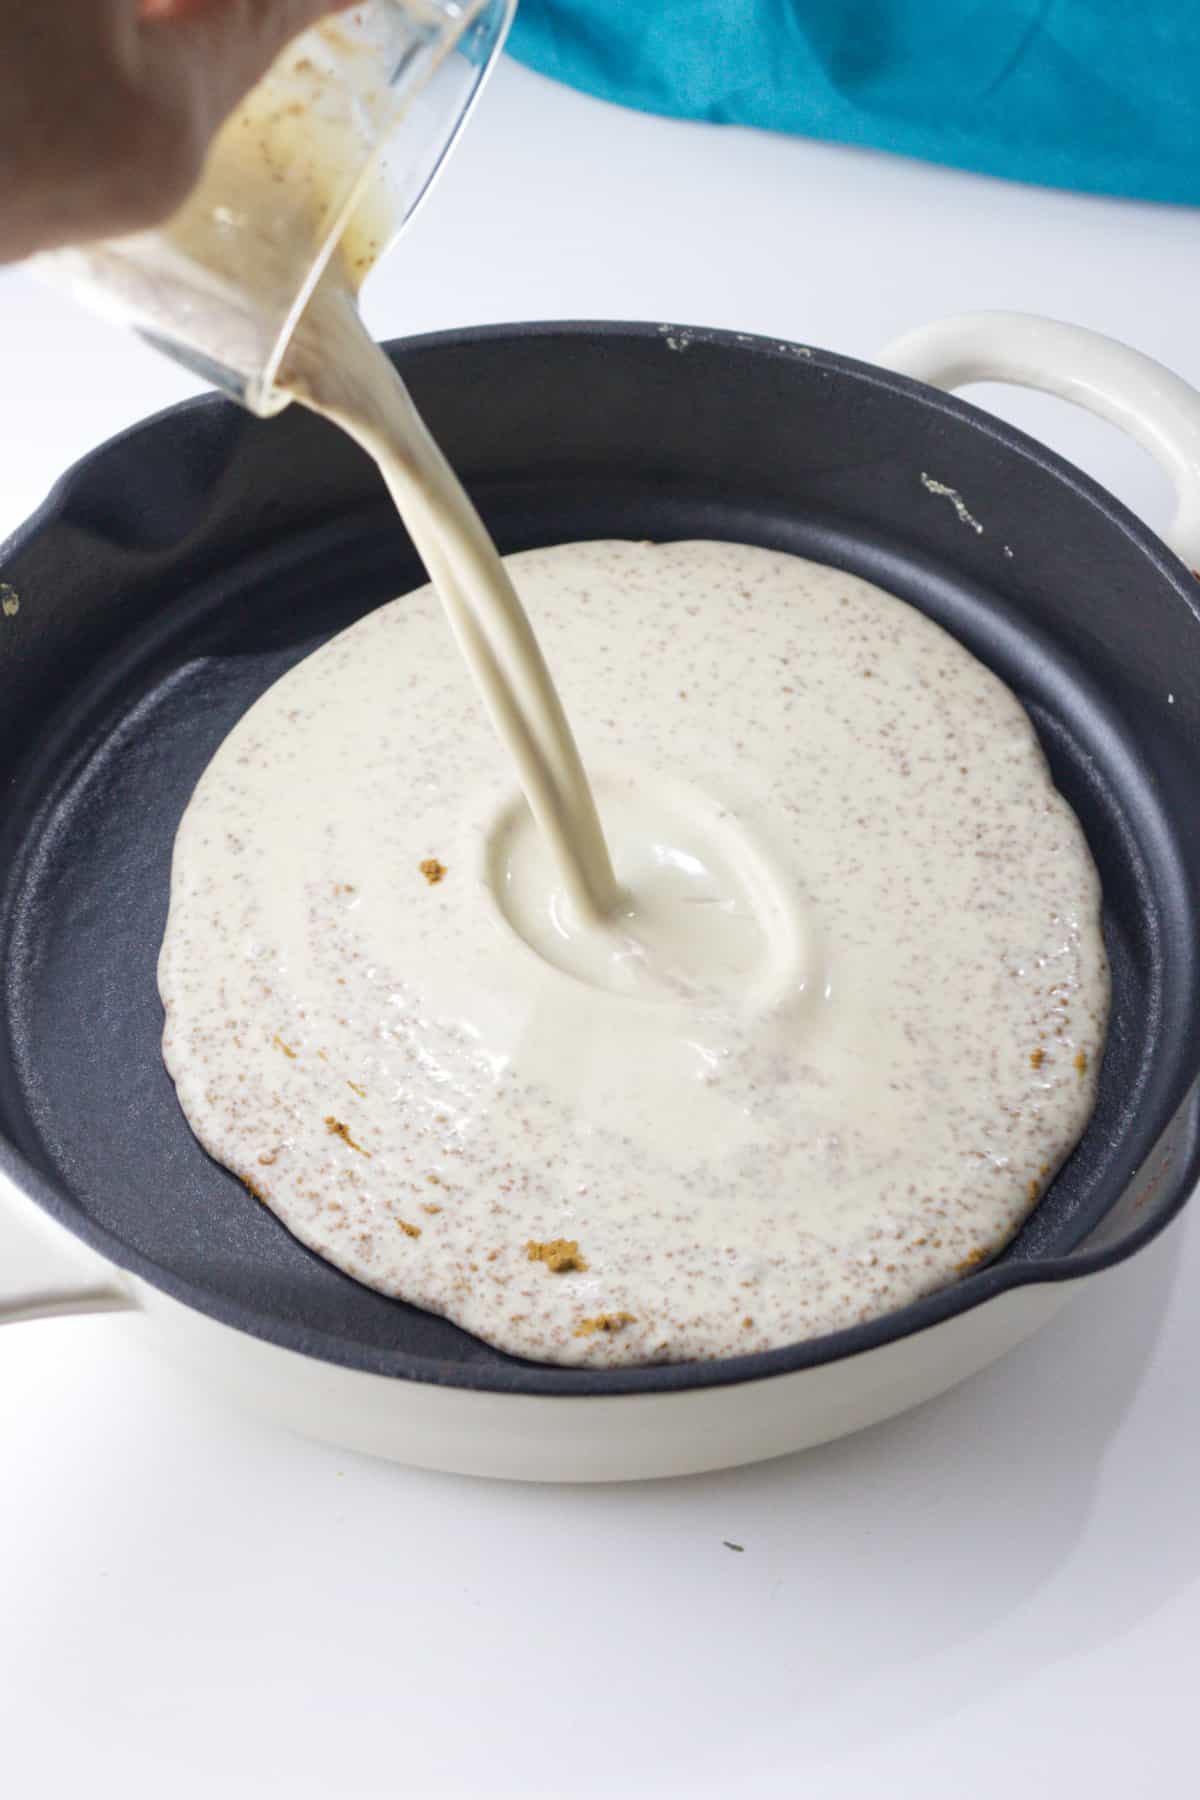 cream mixture poured into baking pan.